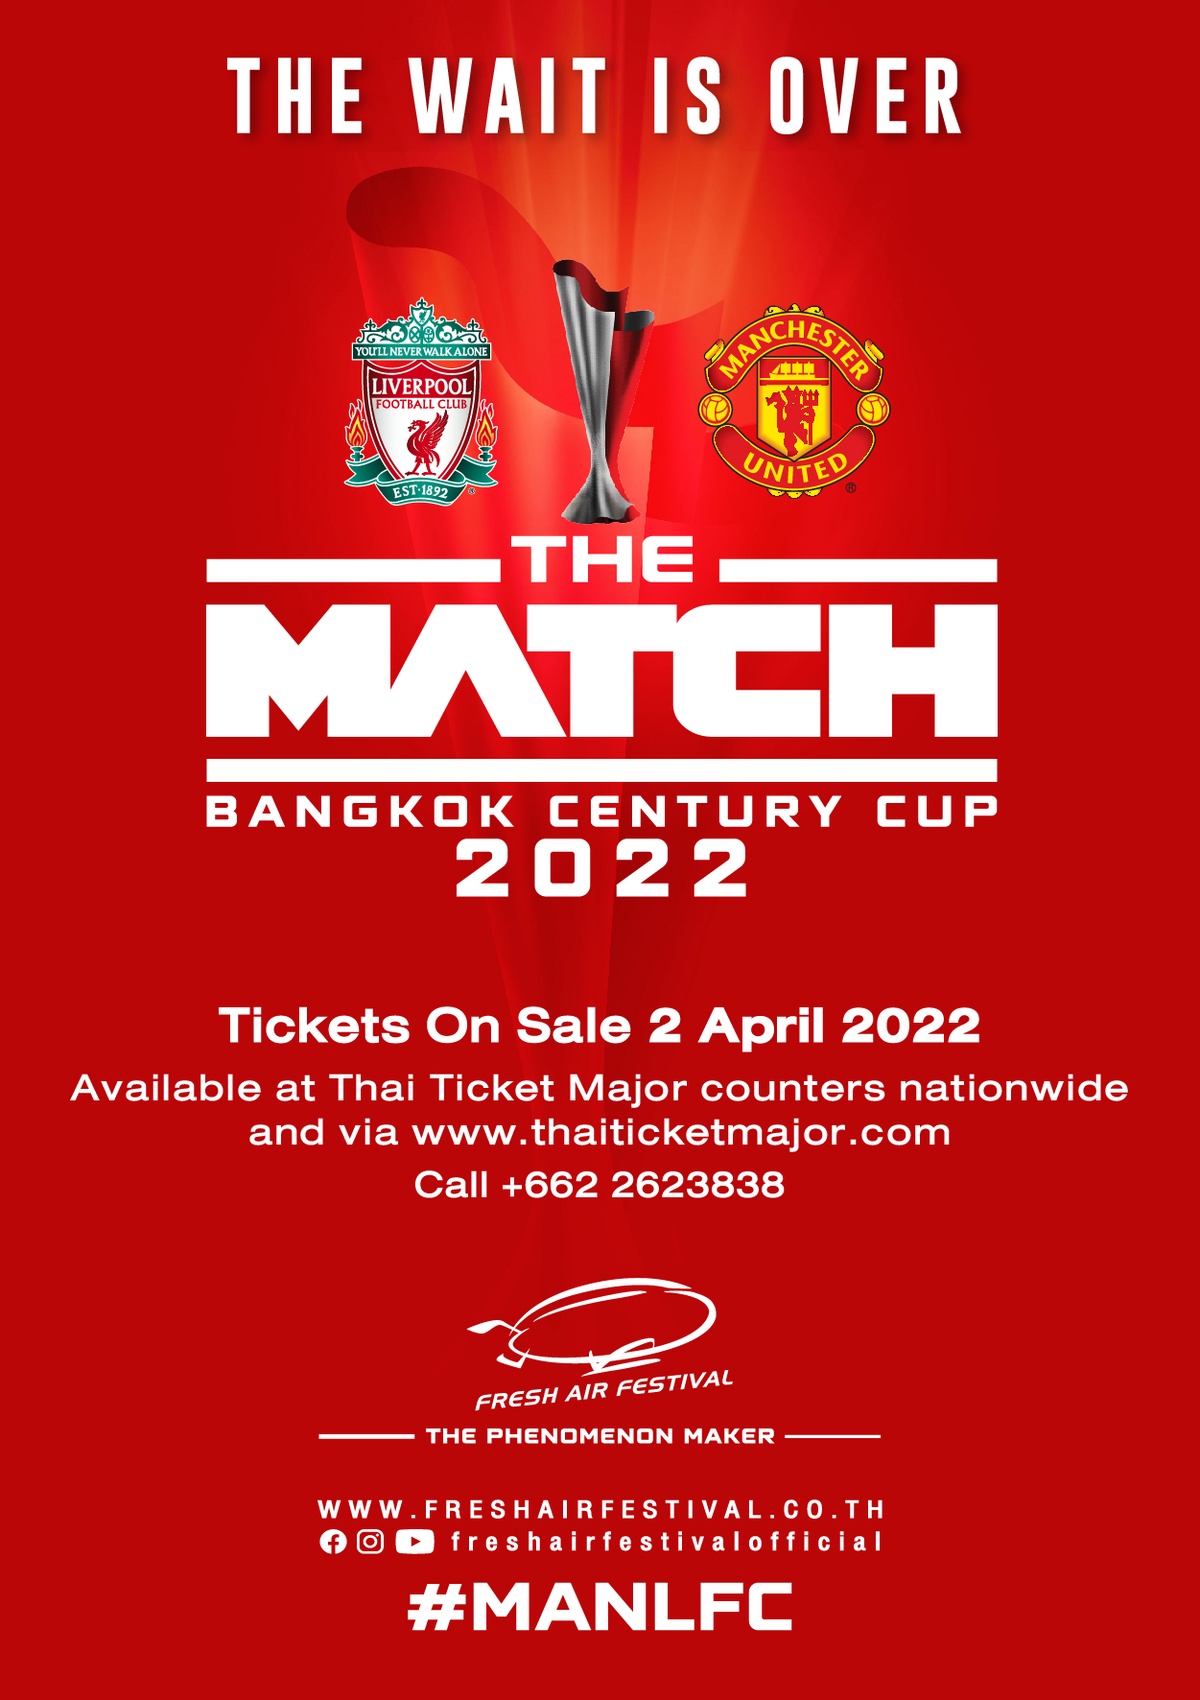 THE MATCH BANGKOK CENTURY CUP 2022 announces public ticket sales date 2 April 2022 at 10:00AM Bangkok local time